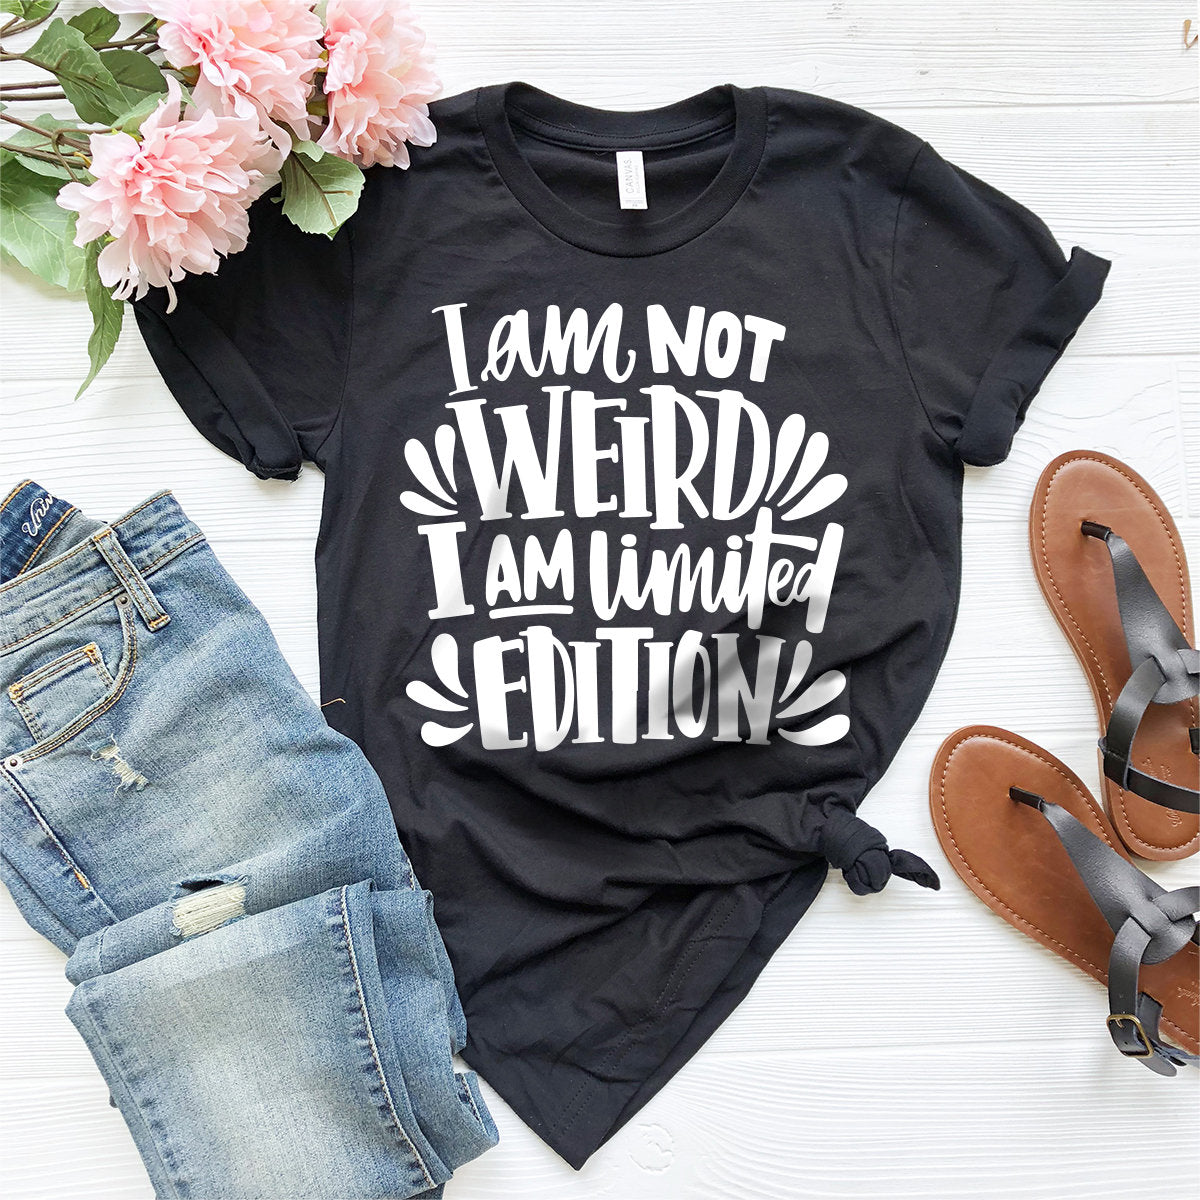 Funny Shirt, Shirt With Saying, Humorous T Shirt, Funny T-Shirt, Sarca –